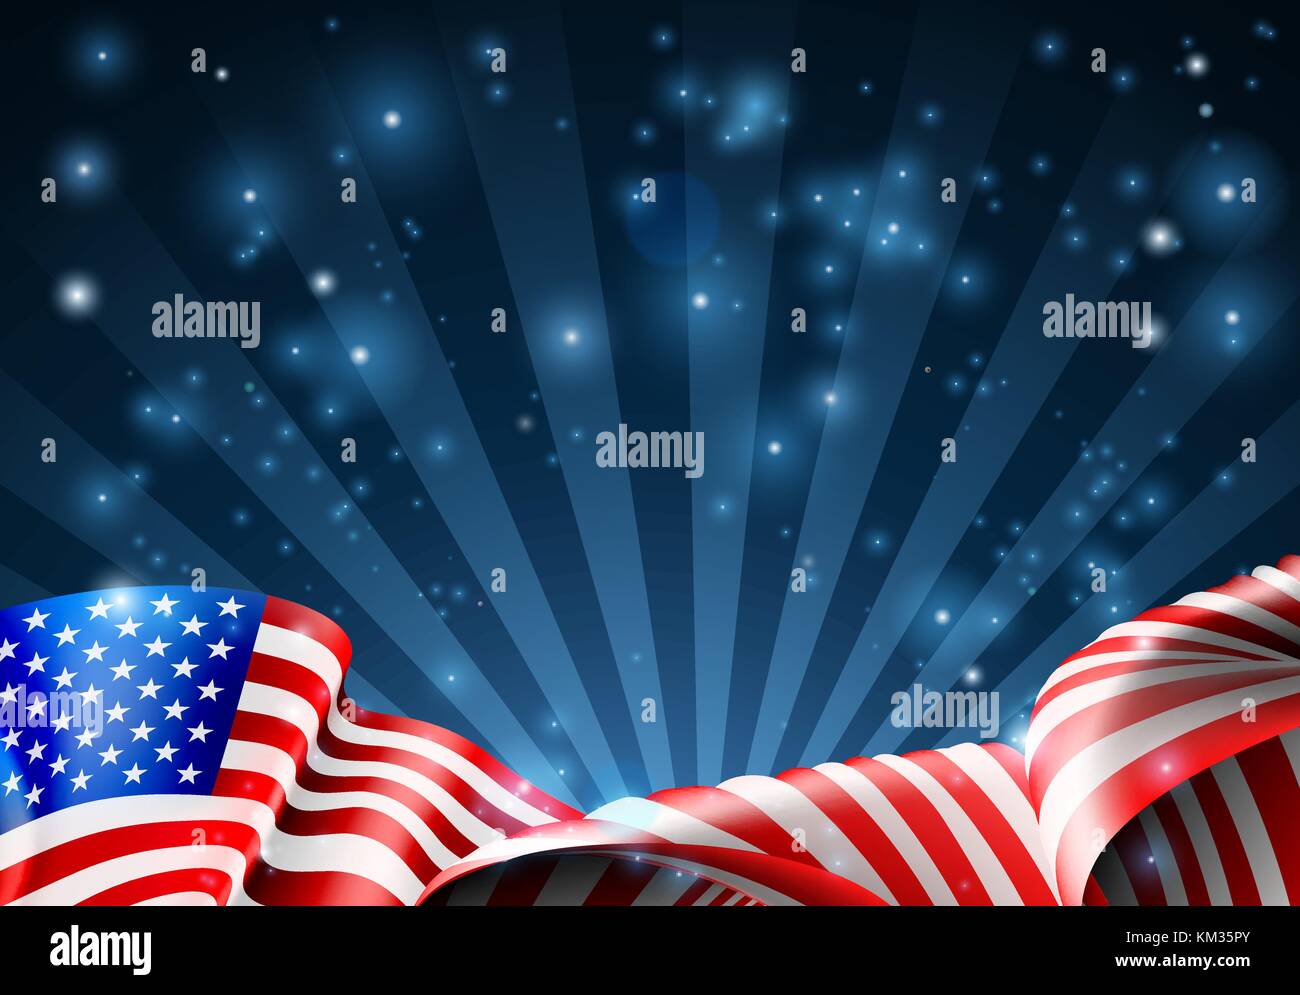 American flag patriotic or political design Stock Vector